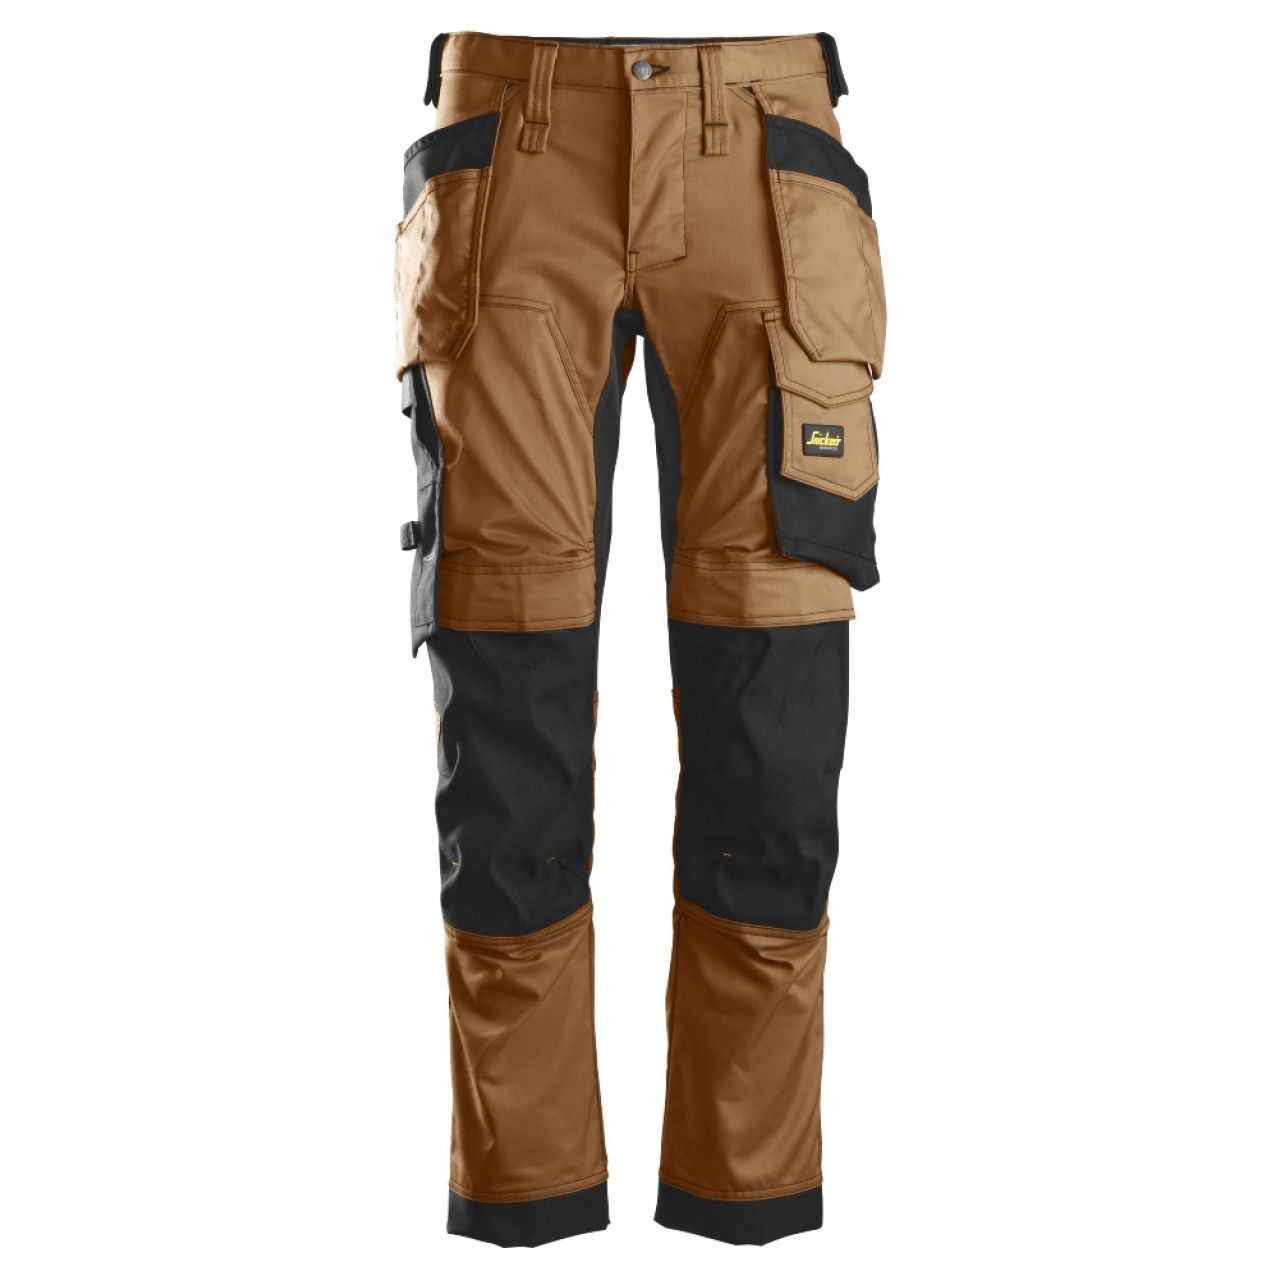 6241 Pantalones largos de trabajo elásticos con bolsillos flotantes AllroundWork marron-negro talla 146